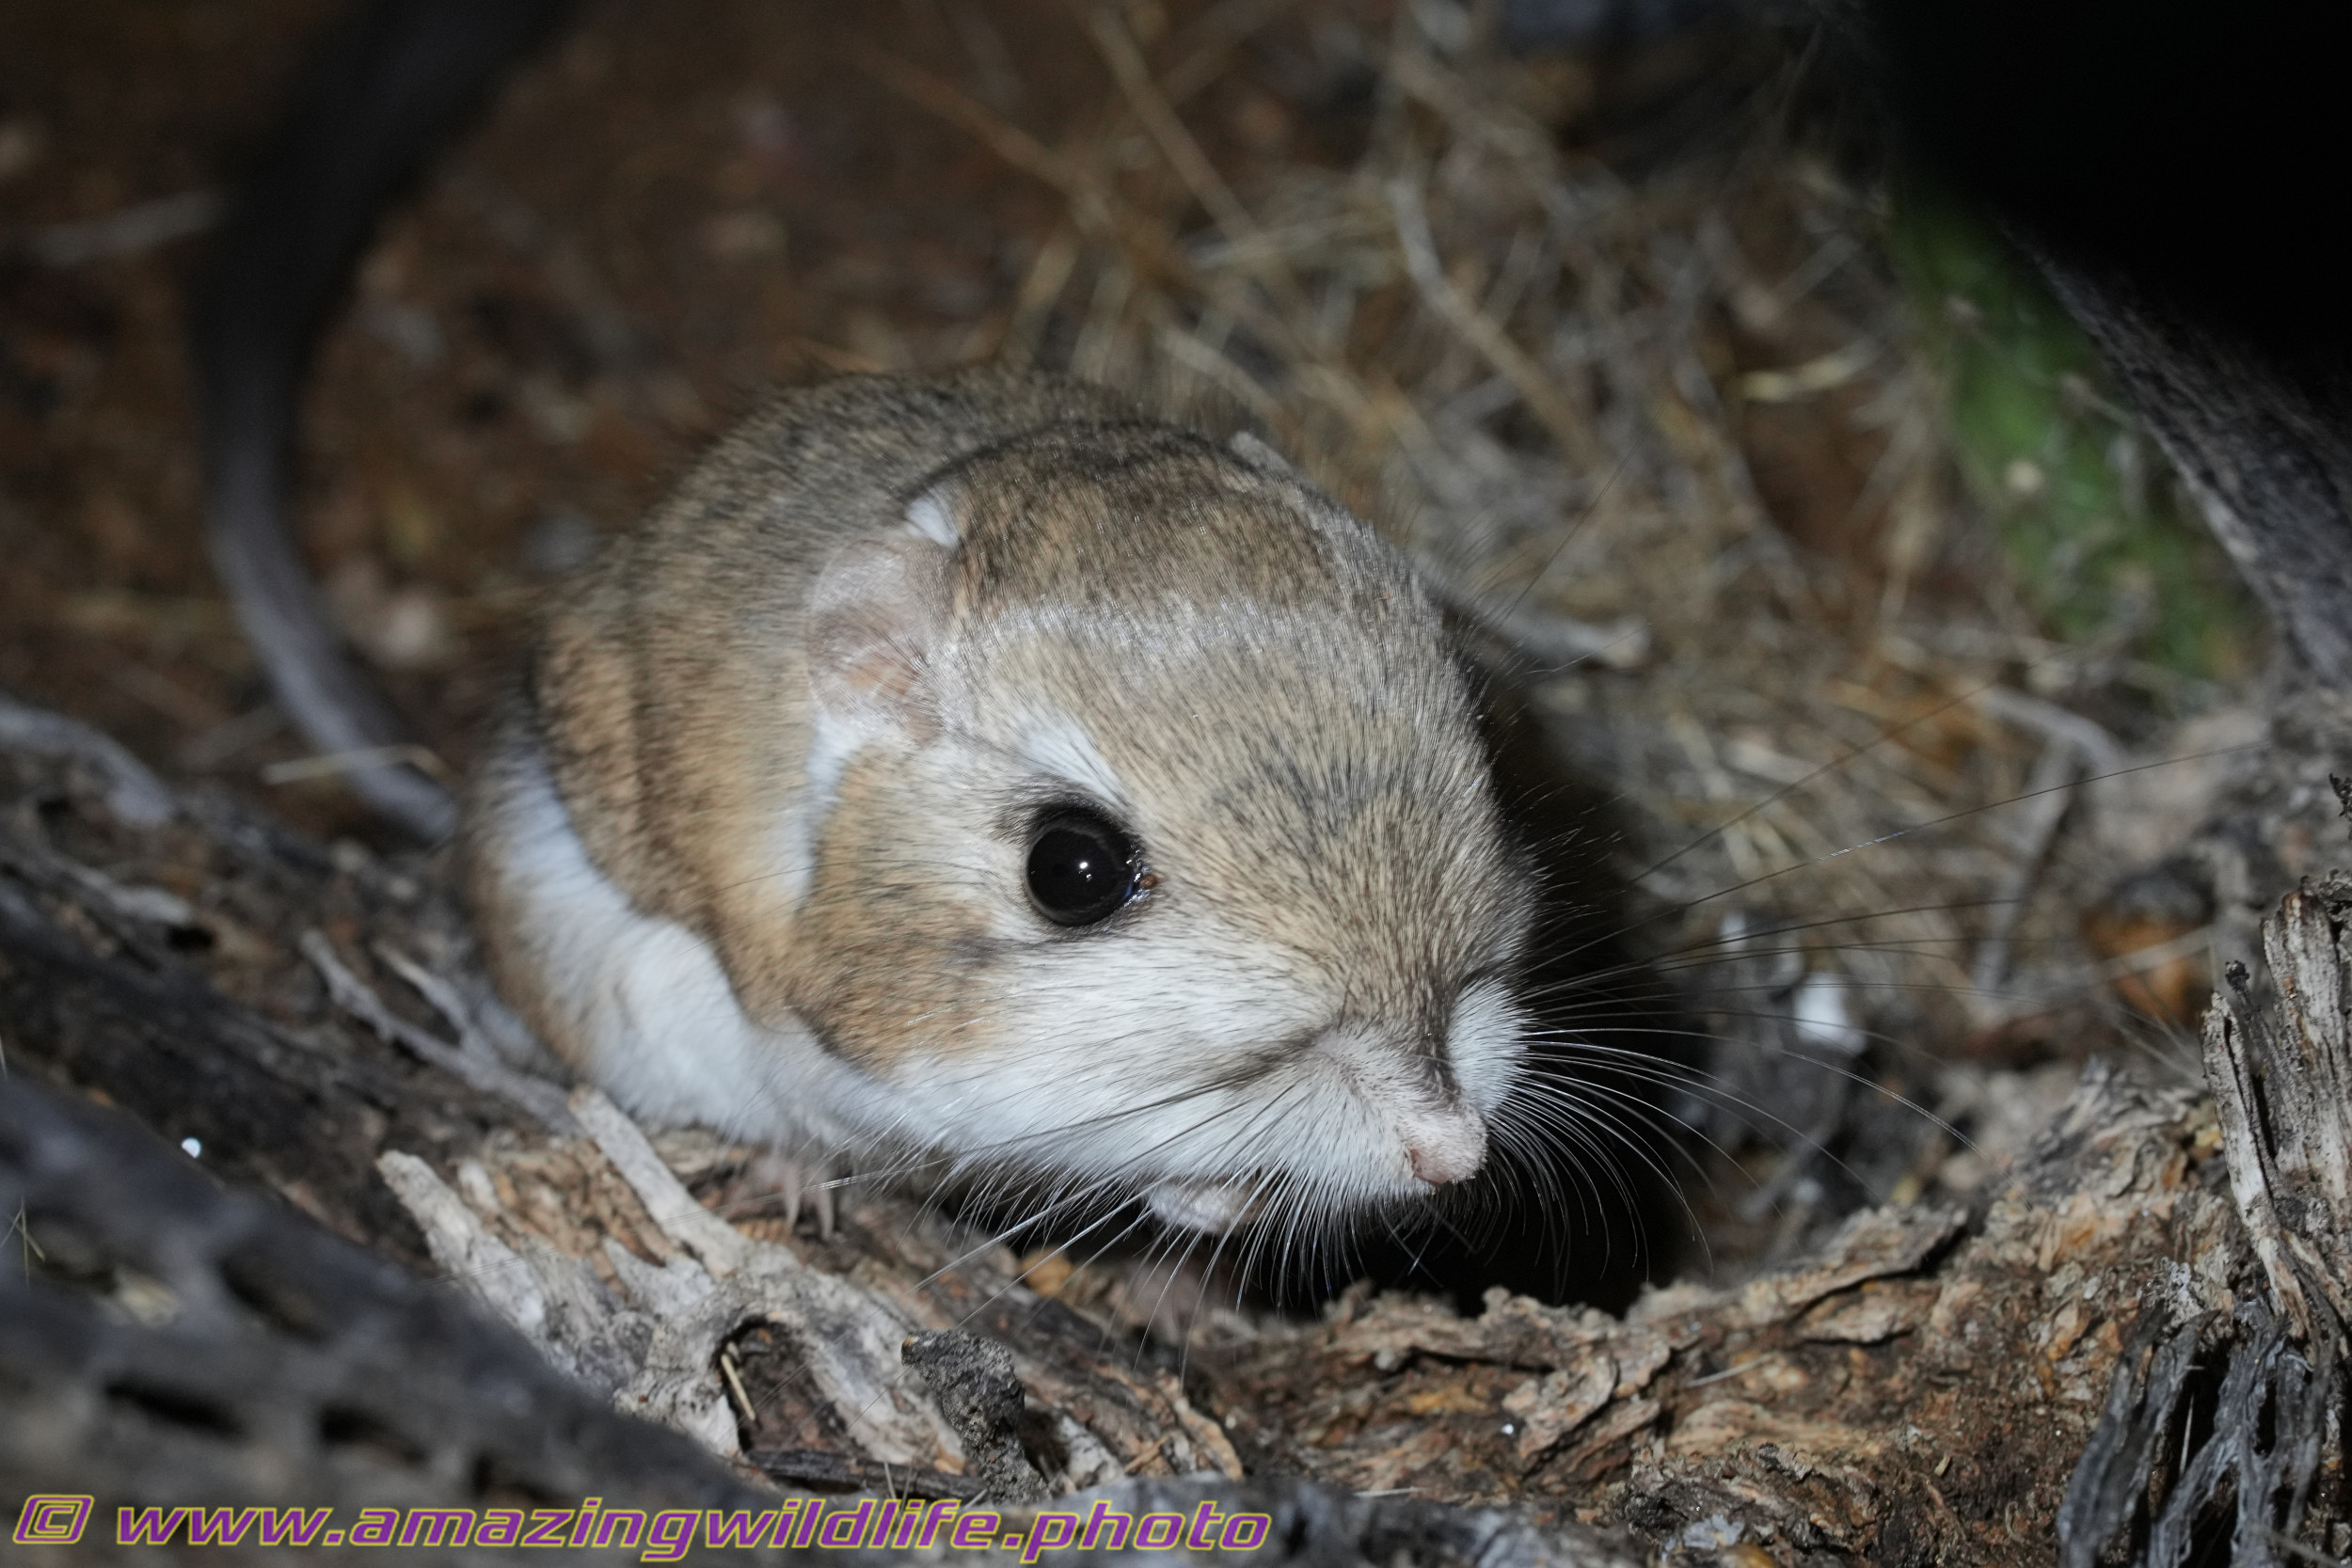 Desert trip with Rowshan – part 2 - Kangaroo mouse